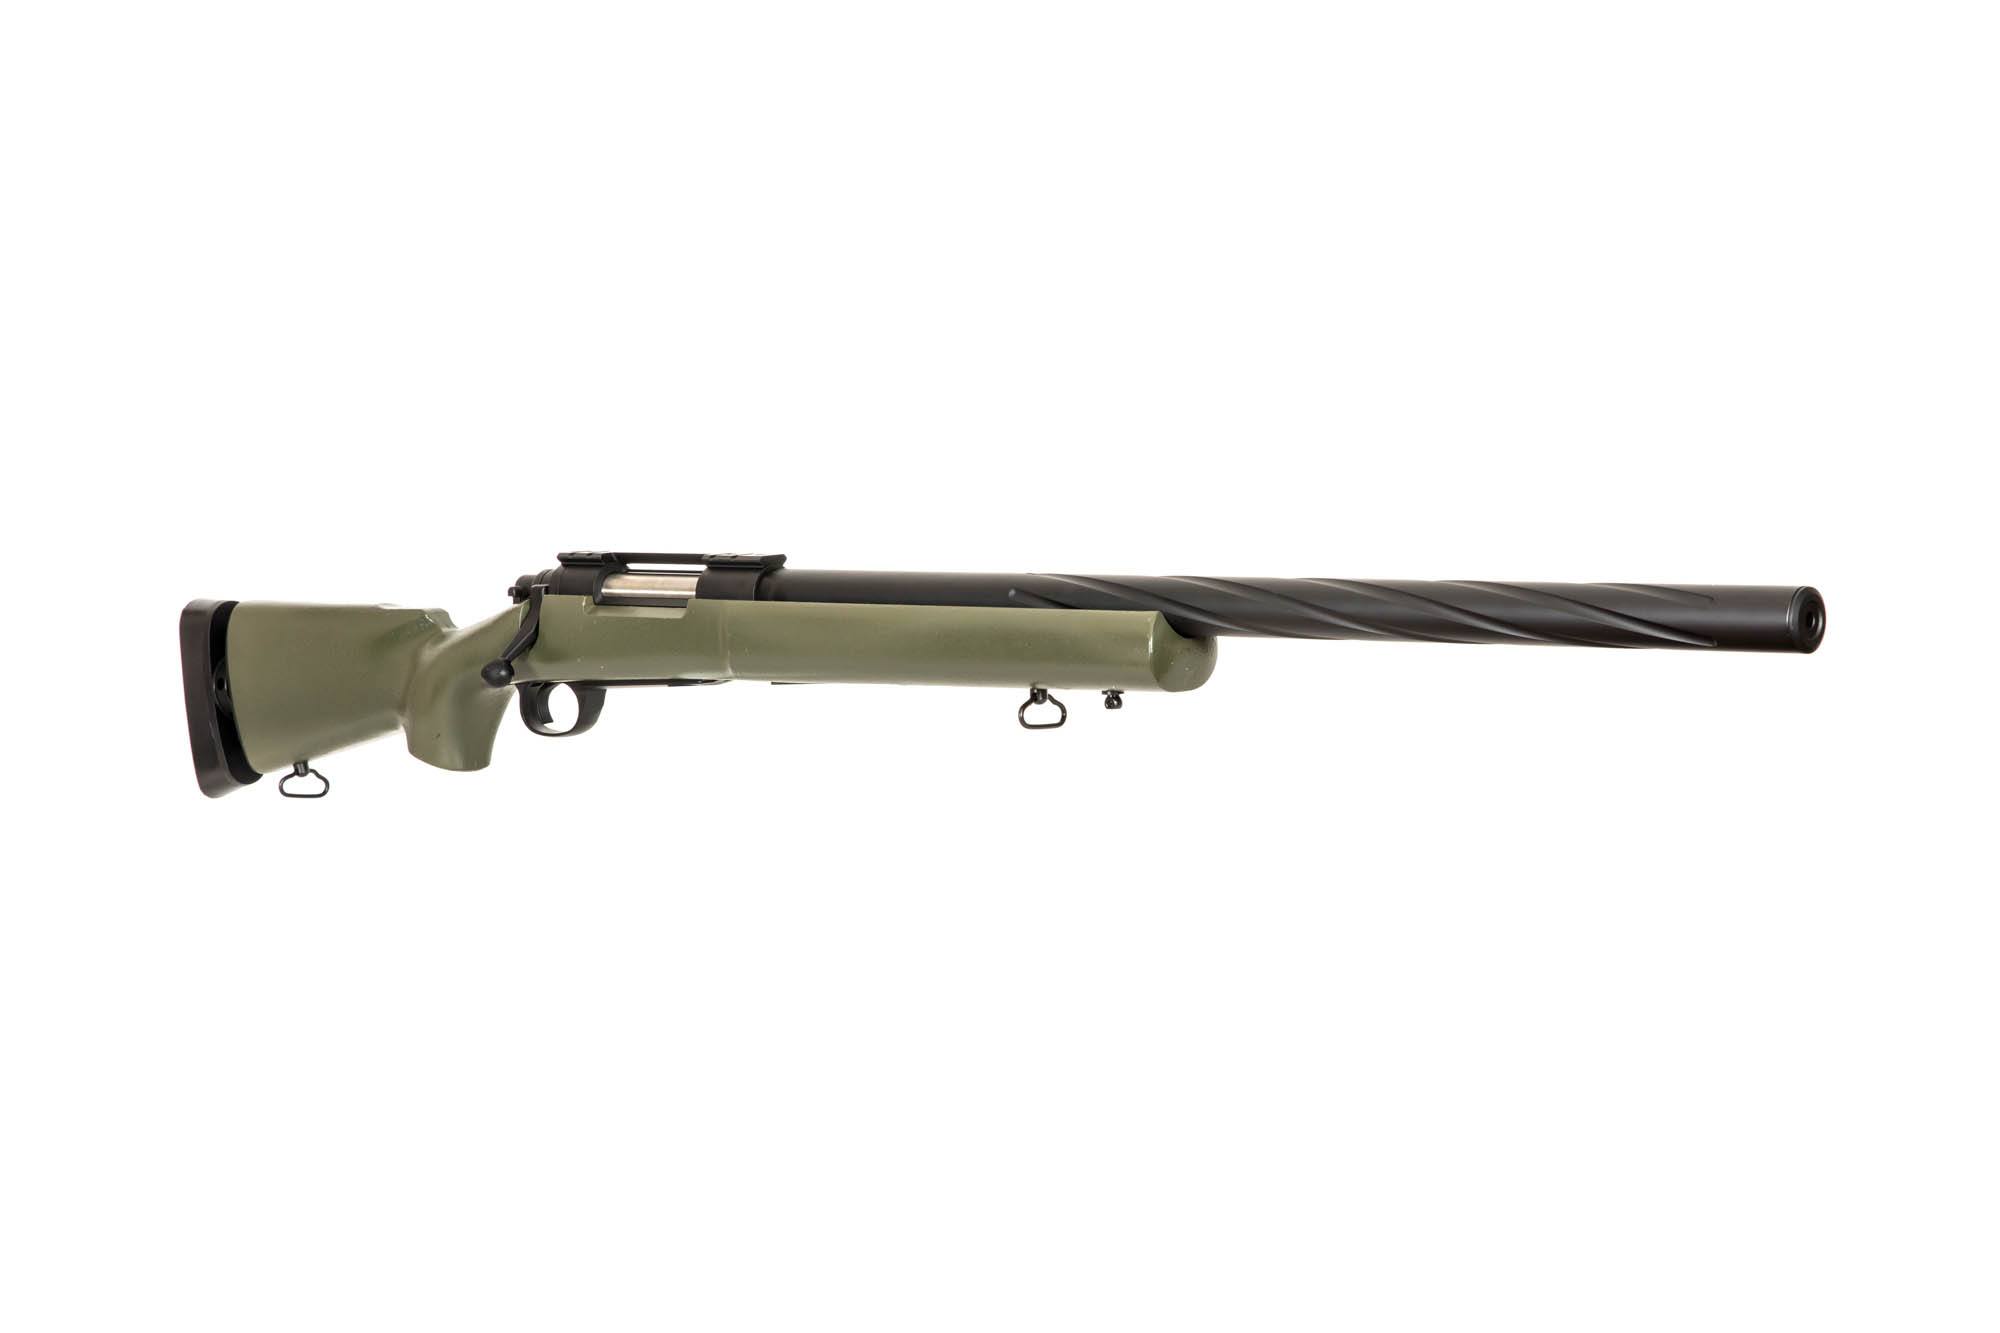 SW-04D Upgraded Sniper Rifle Replica - olive